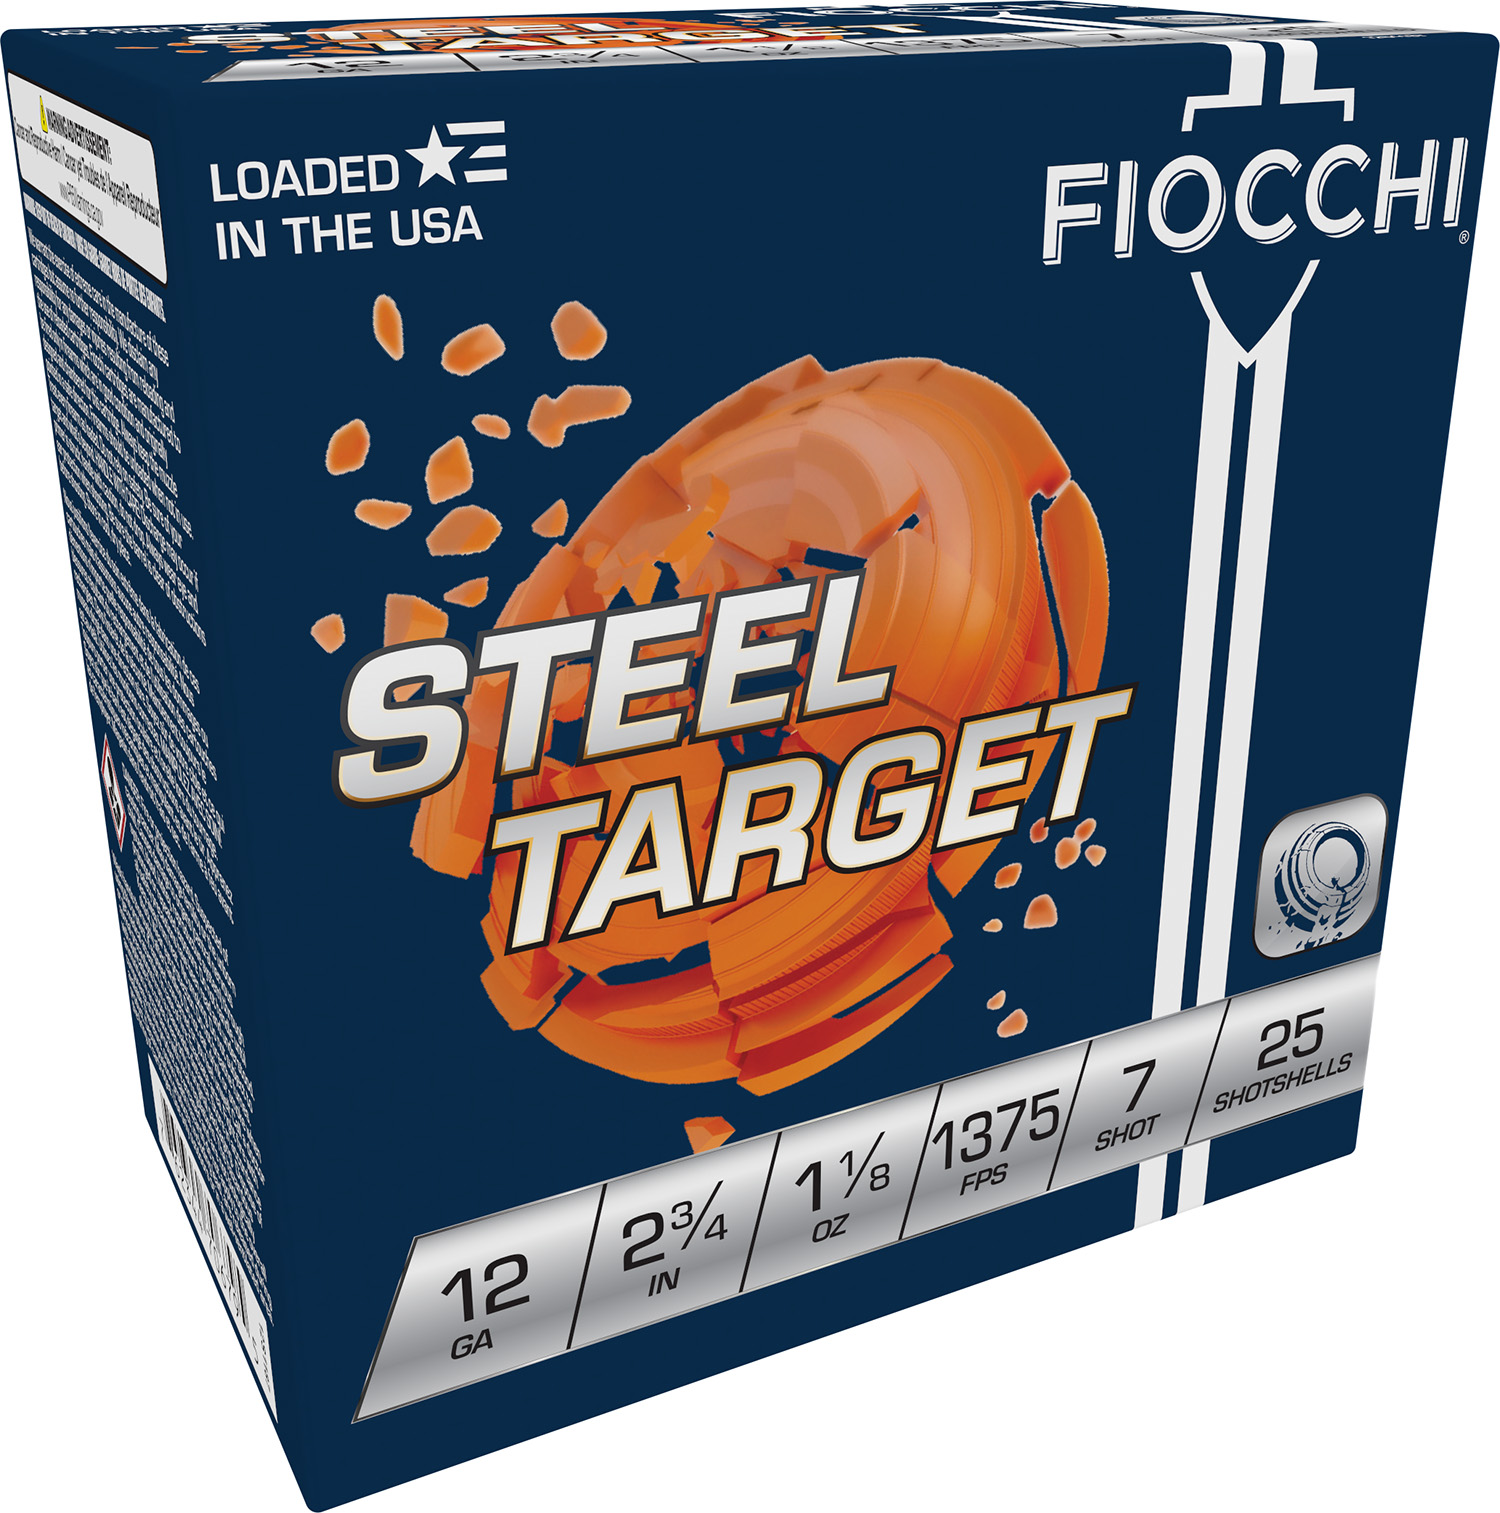 Fiocchi 12S1187 Target  12 Gauge 2.75